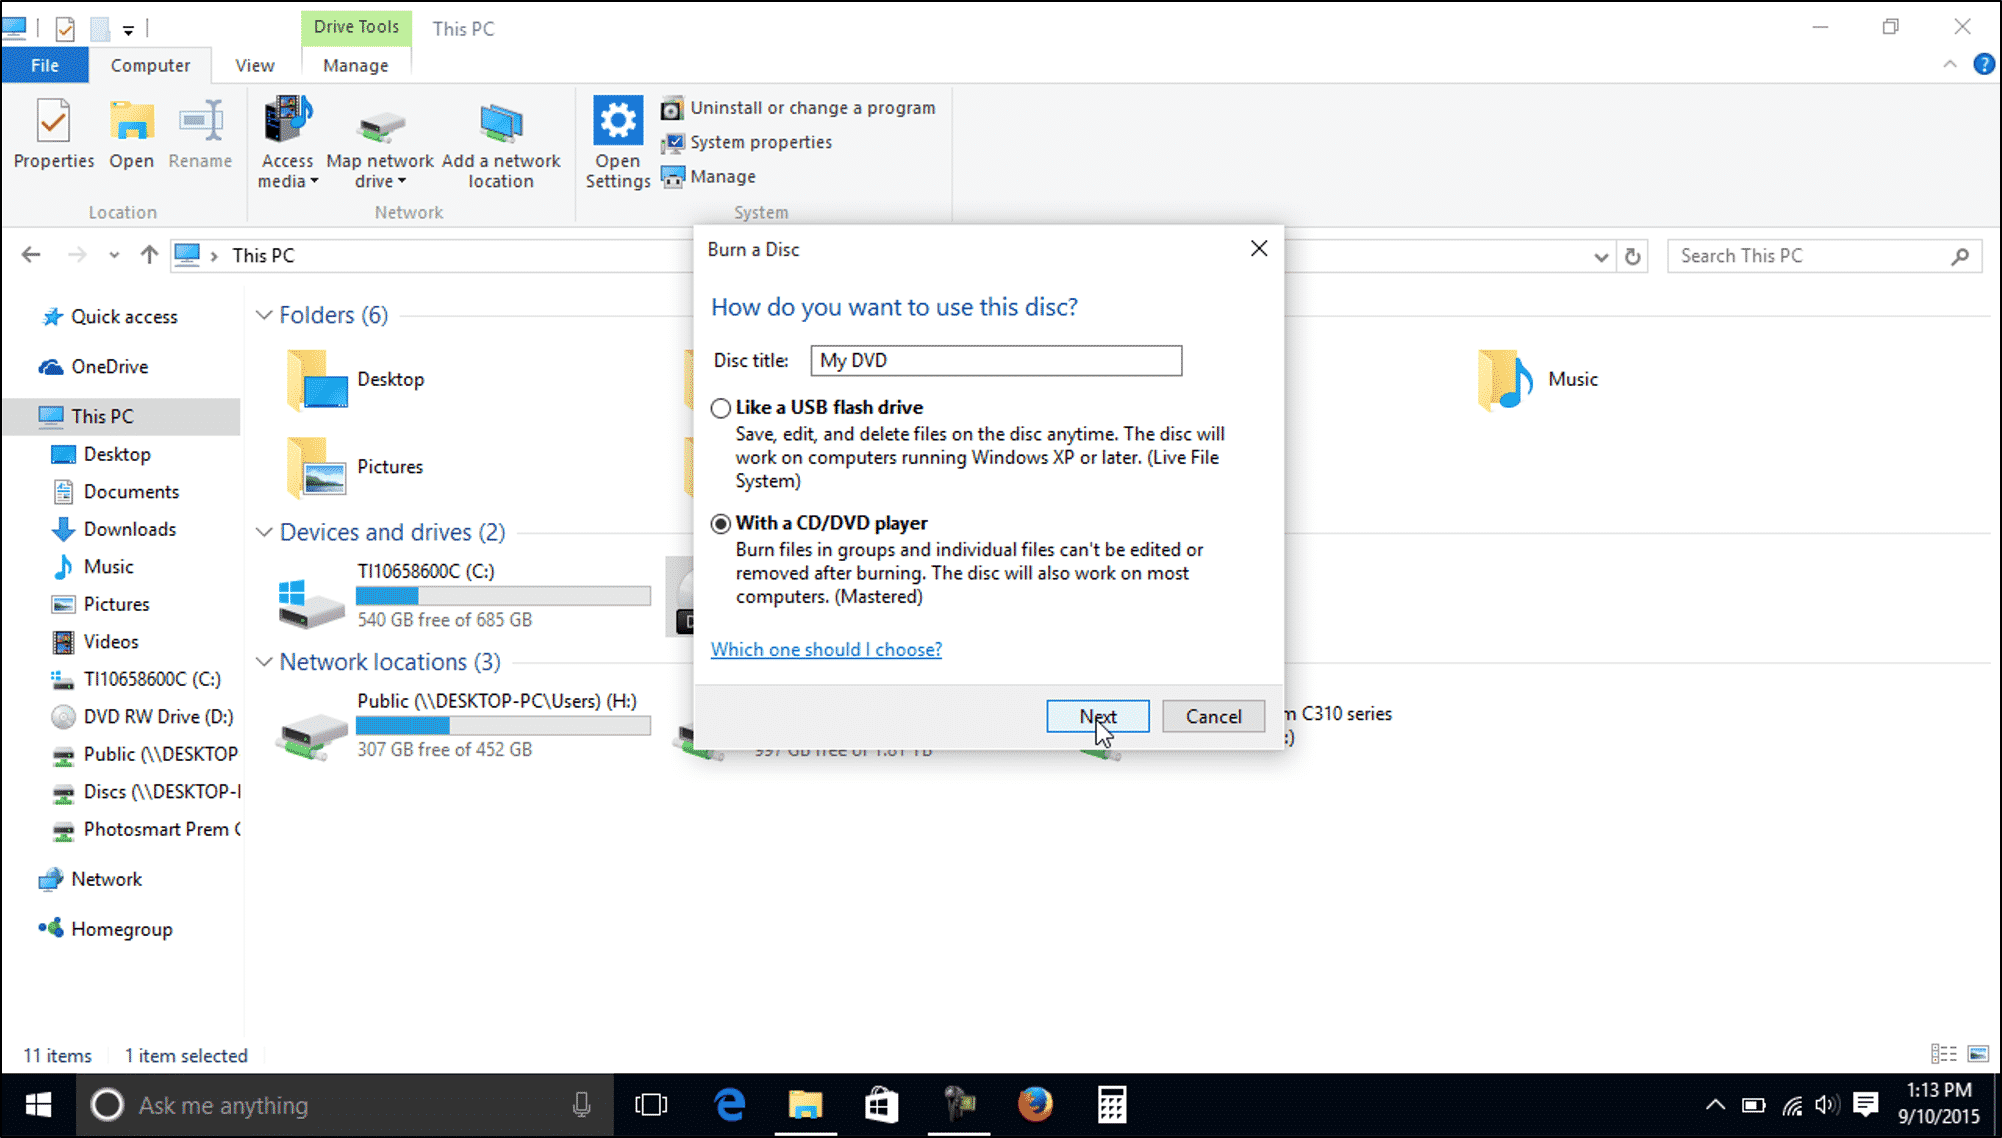 How to Burn a Disc in Windows 10?